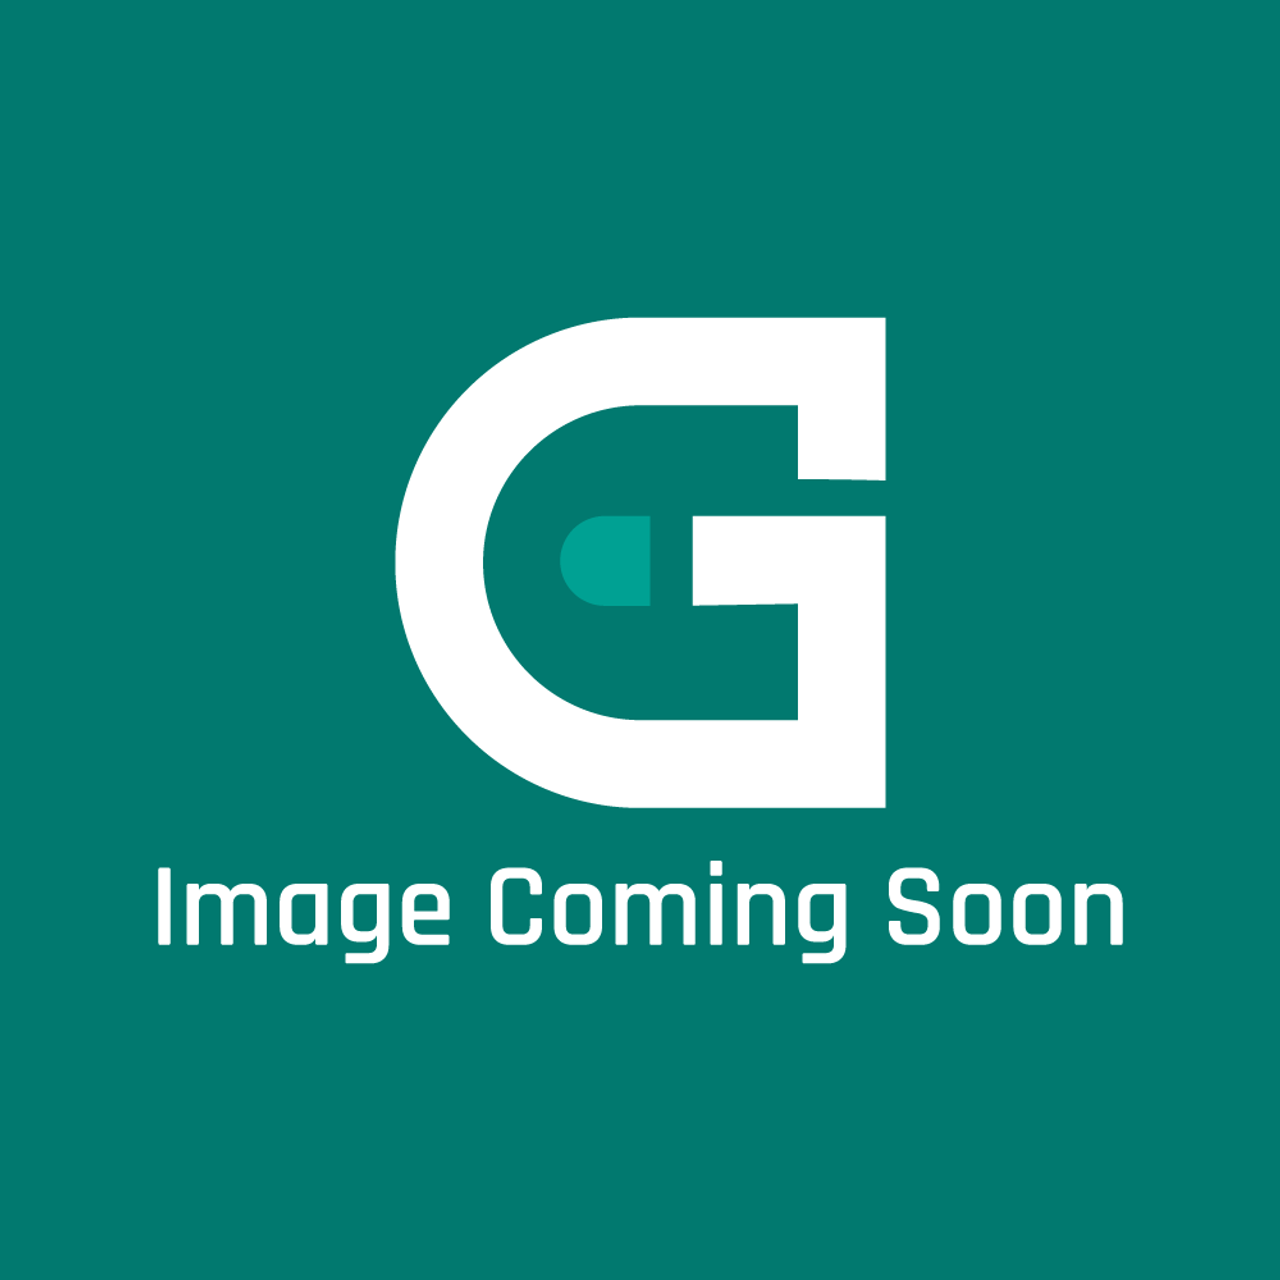 Viking 054766-6180 - Ff, 42" Door Skin - Cypress Green (Cy) - Image Coming Soon!